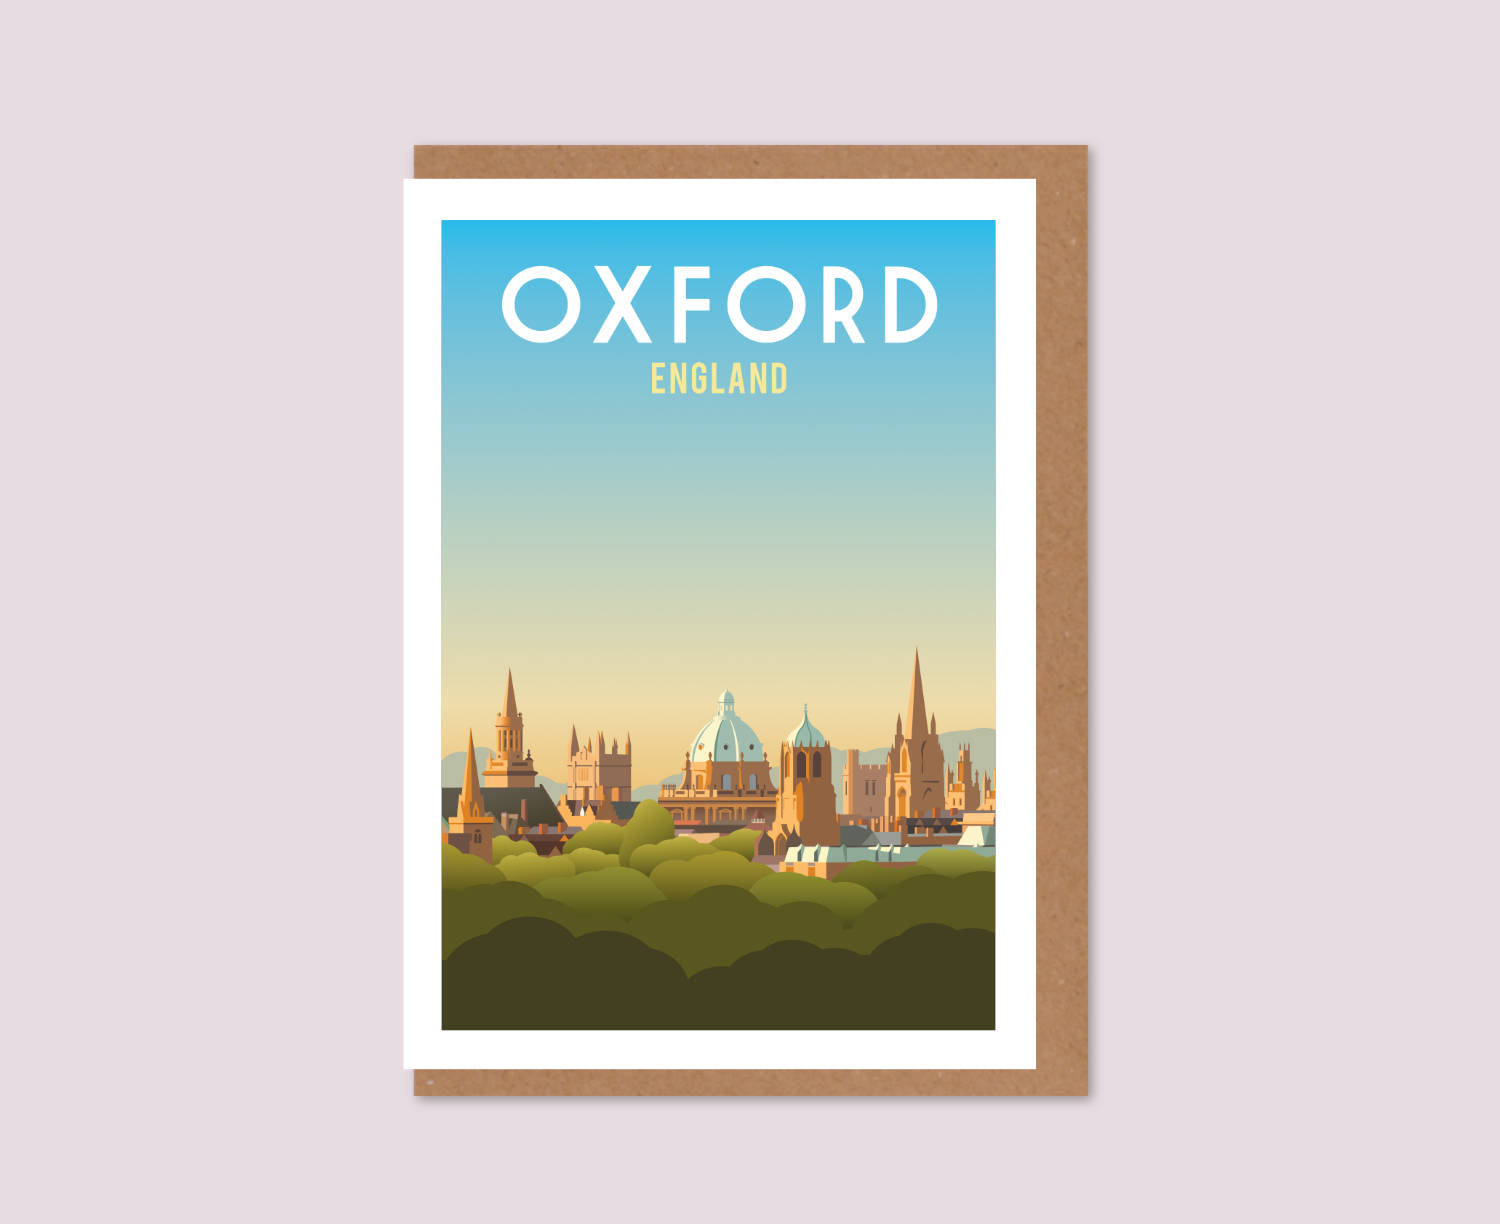 Oxford Spires Greeting Card Design